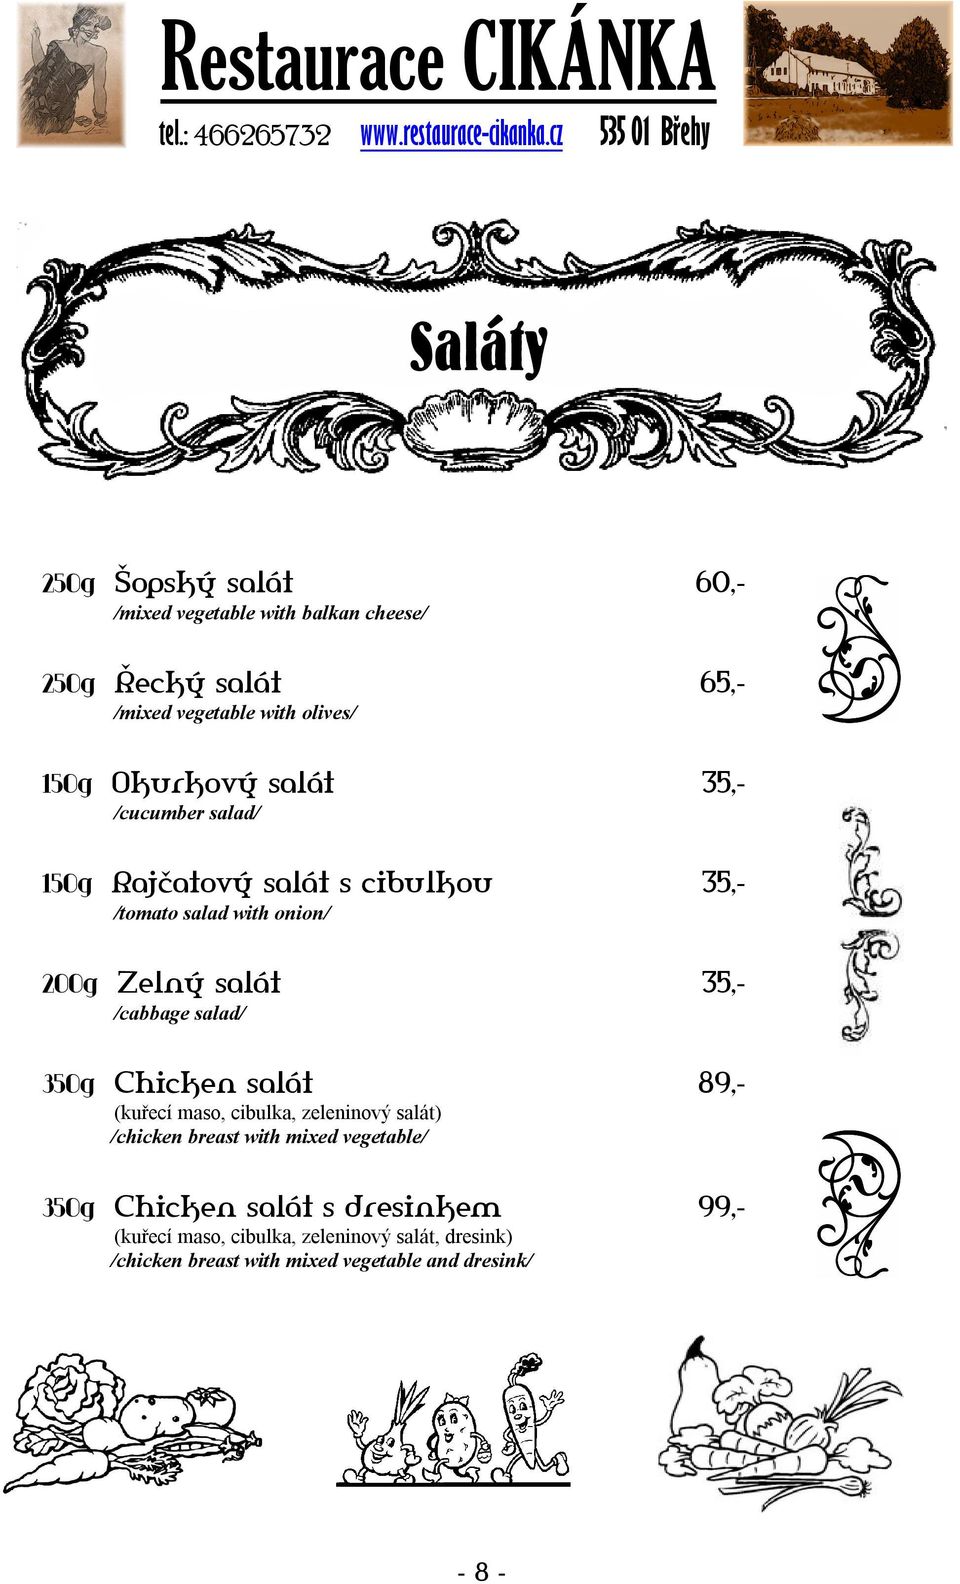 /cabbage salad/ 350g Chicken salát 89,- (kuřecí maso, cibulka, zeleninový salát) /chicken breast with mixed vegetable/ 350g